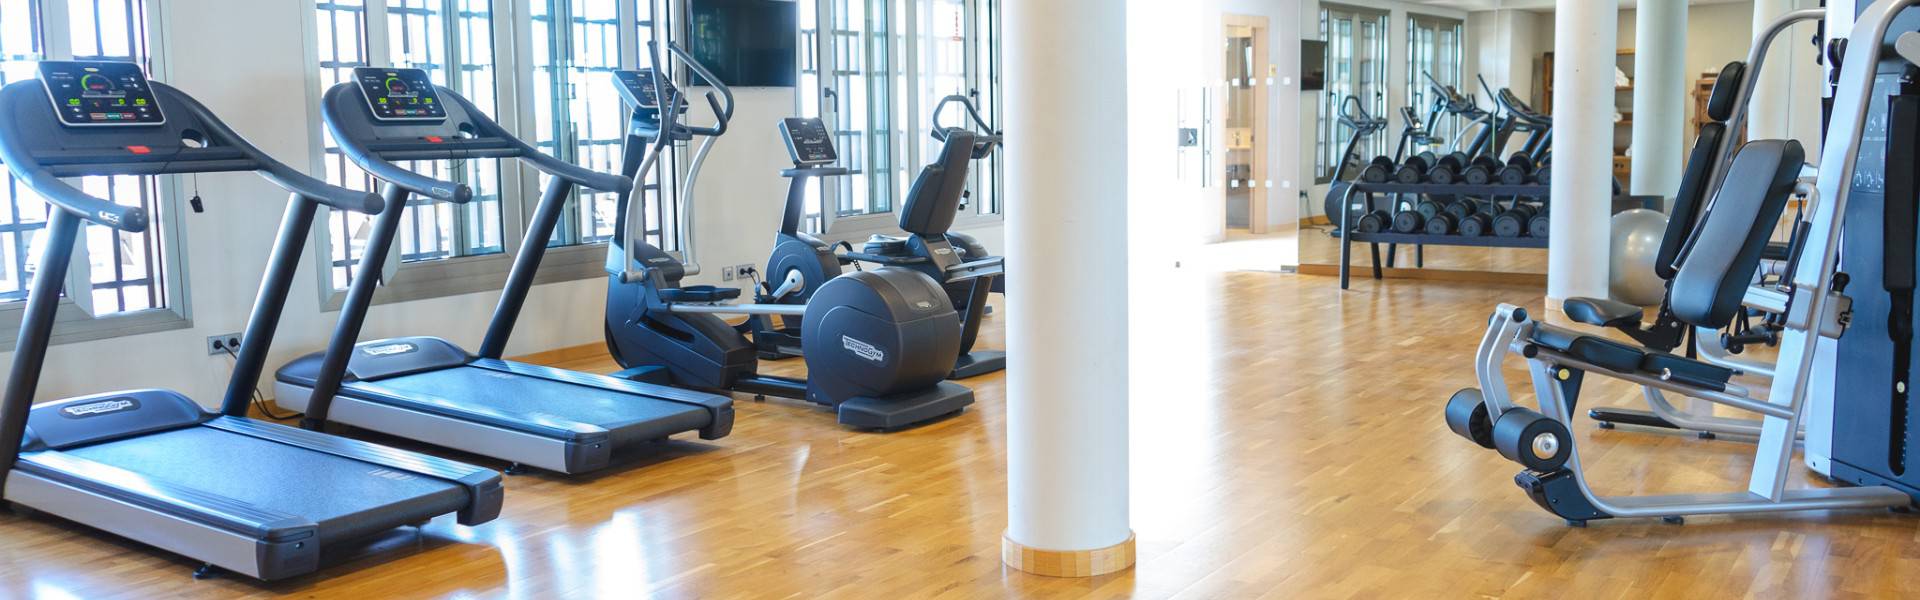 Fitnessstudio und Personal Trainer Service Abama Hotels